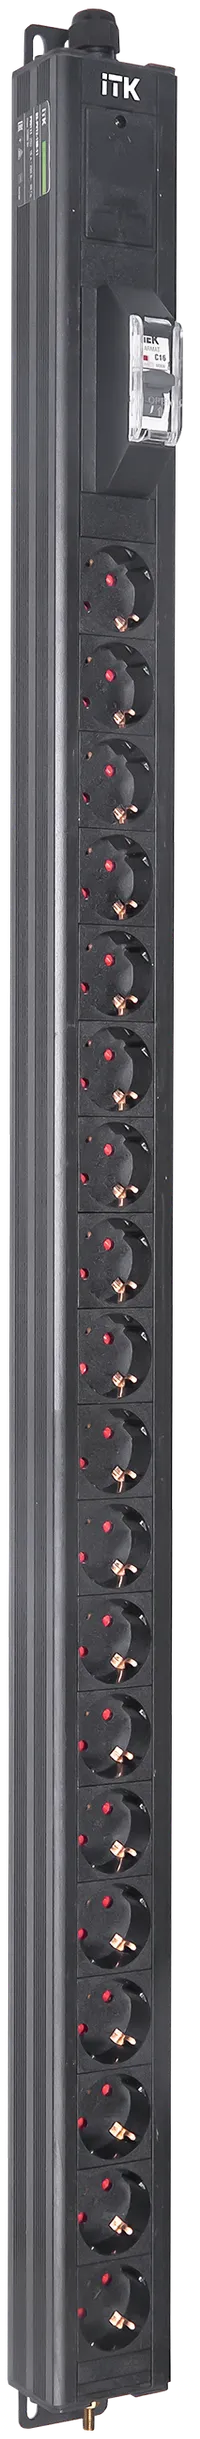 ITK BASE PDU вертикальный PV0111 25U 1 фаза 16А 19 розеток SCHUKO (немецкий стандарт) кабель 2,6м вилка SCHUKO (немецкий стандарт)